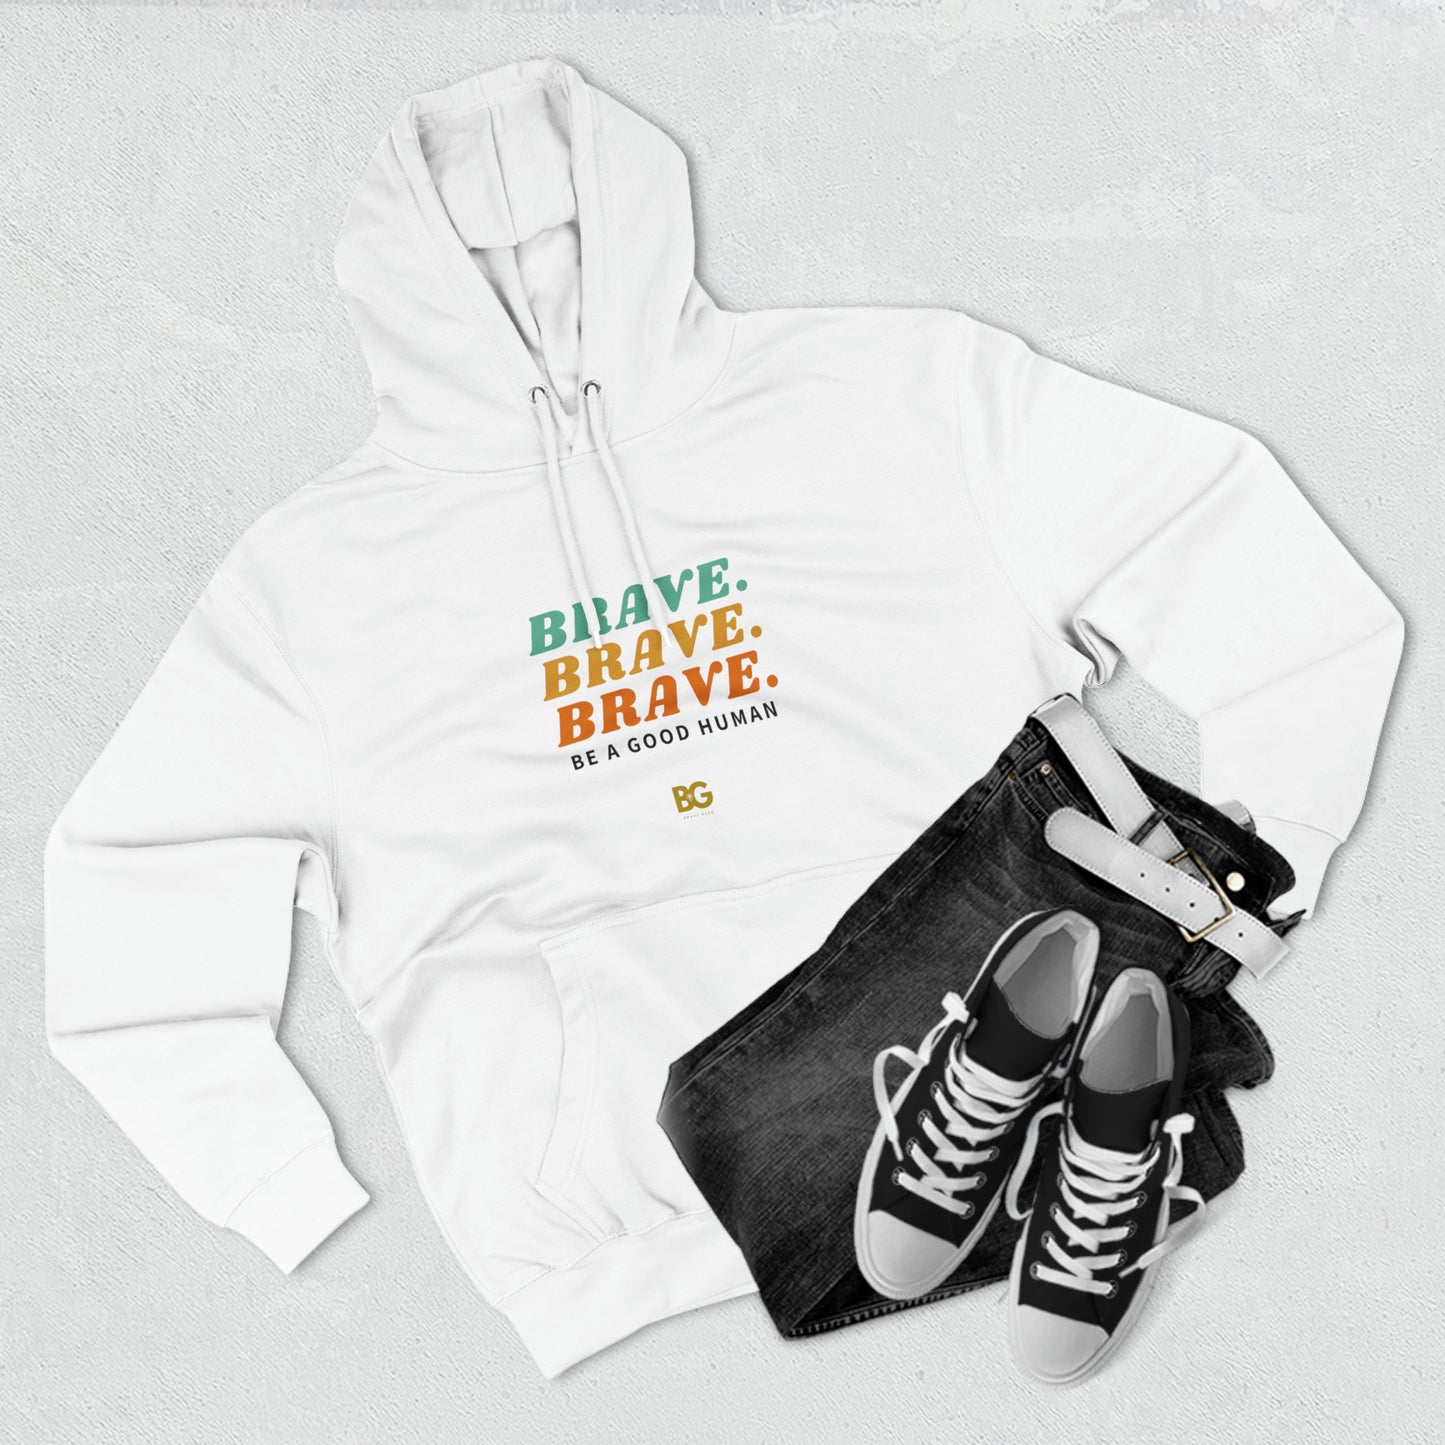 BG "Brave Brave Brave" Premium Pullover Hoodie